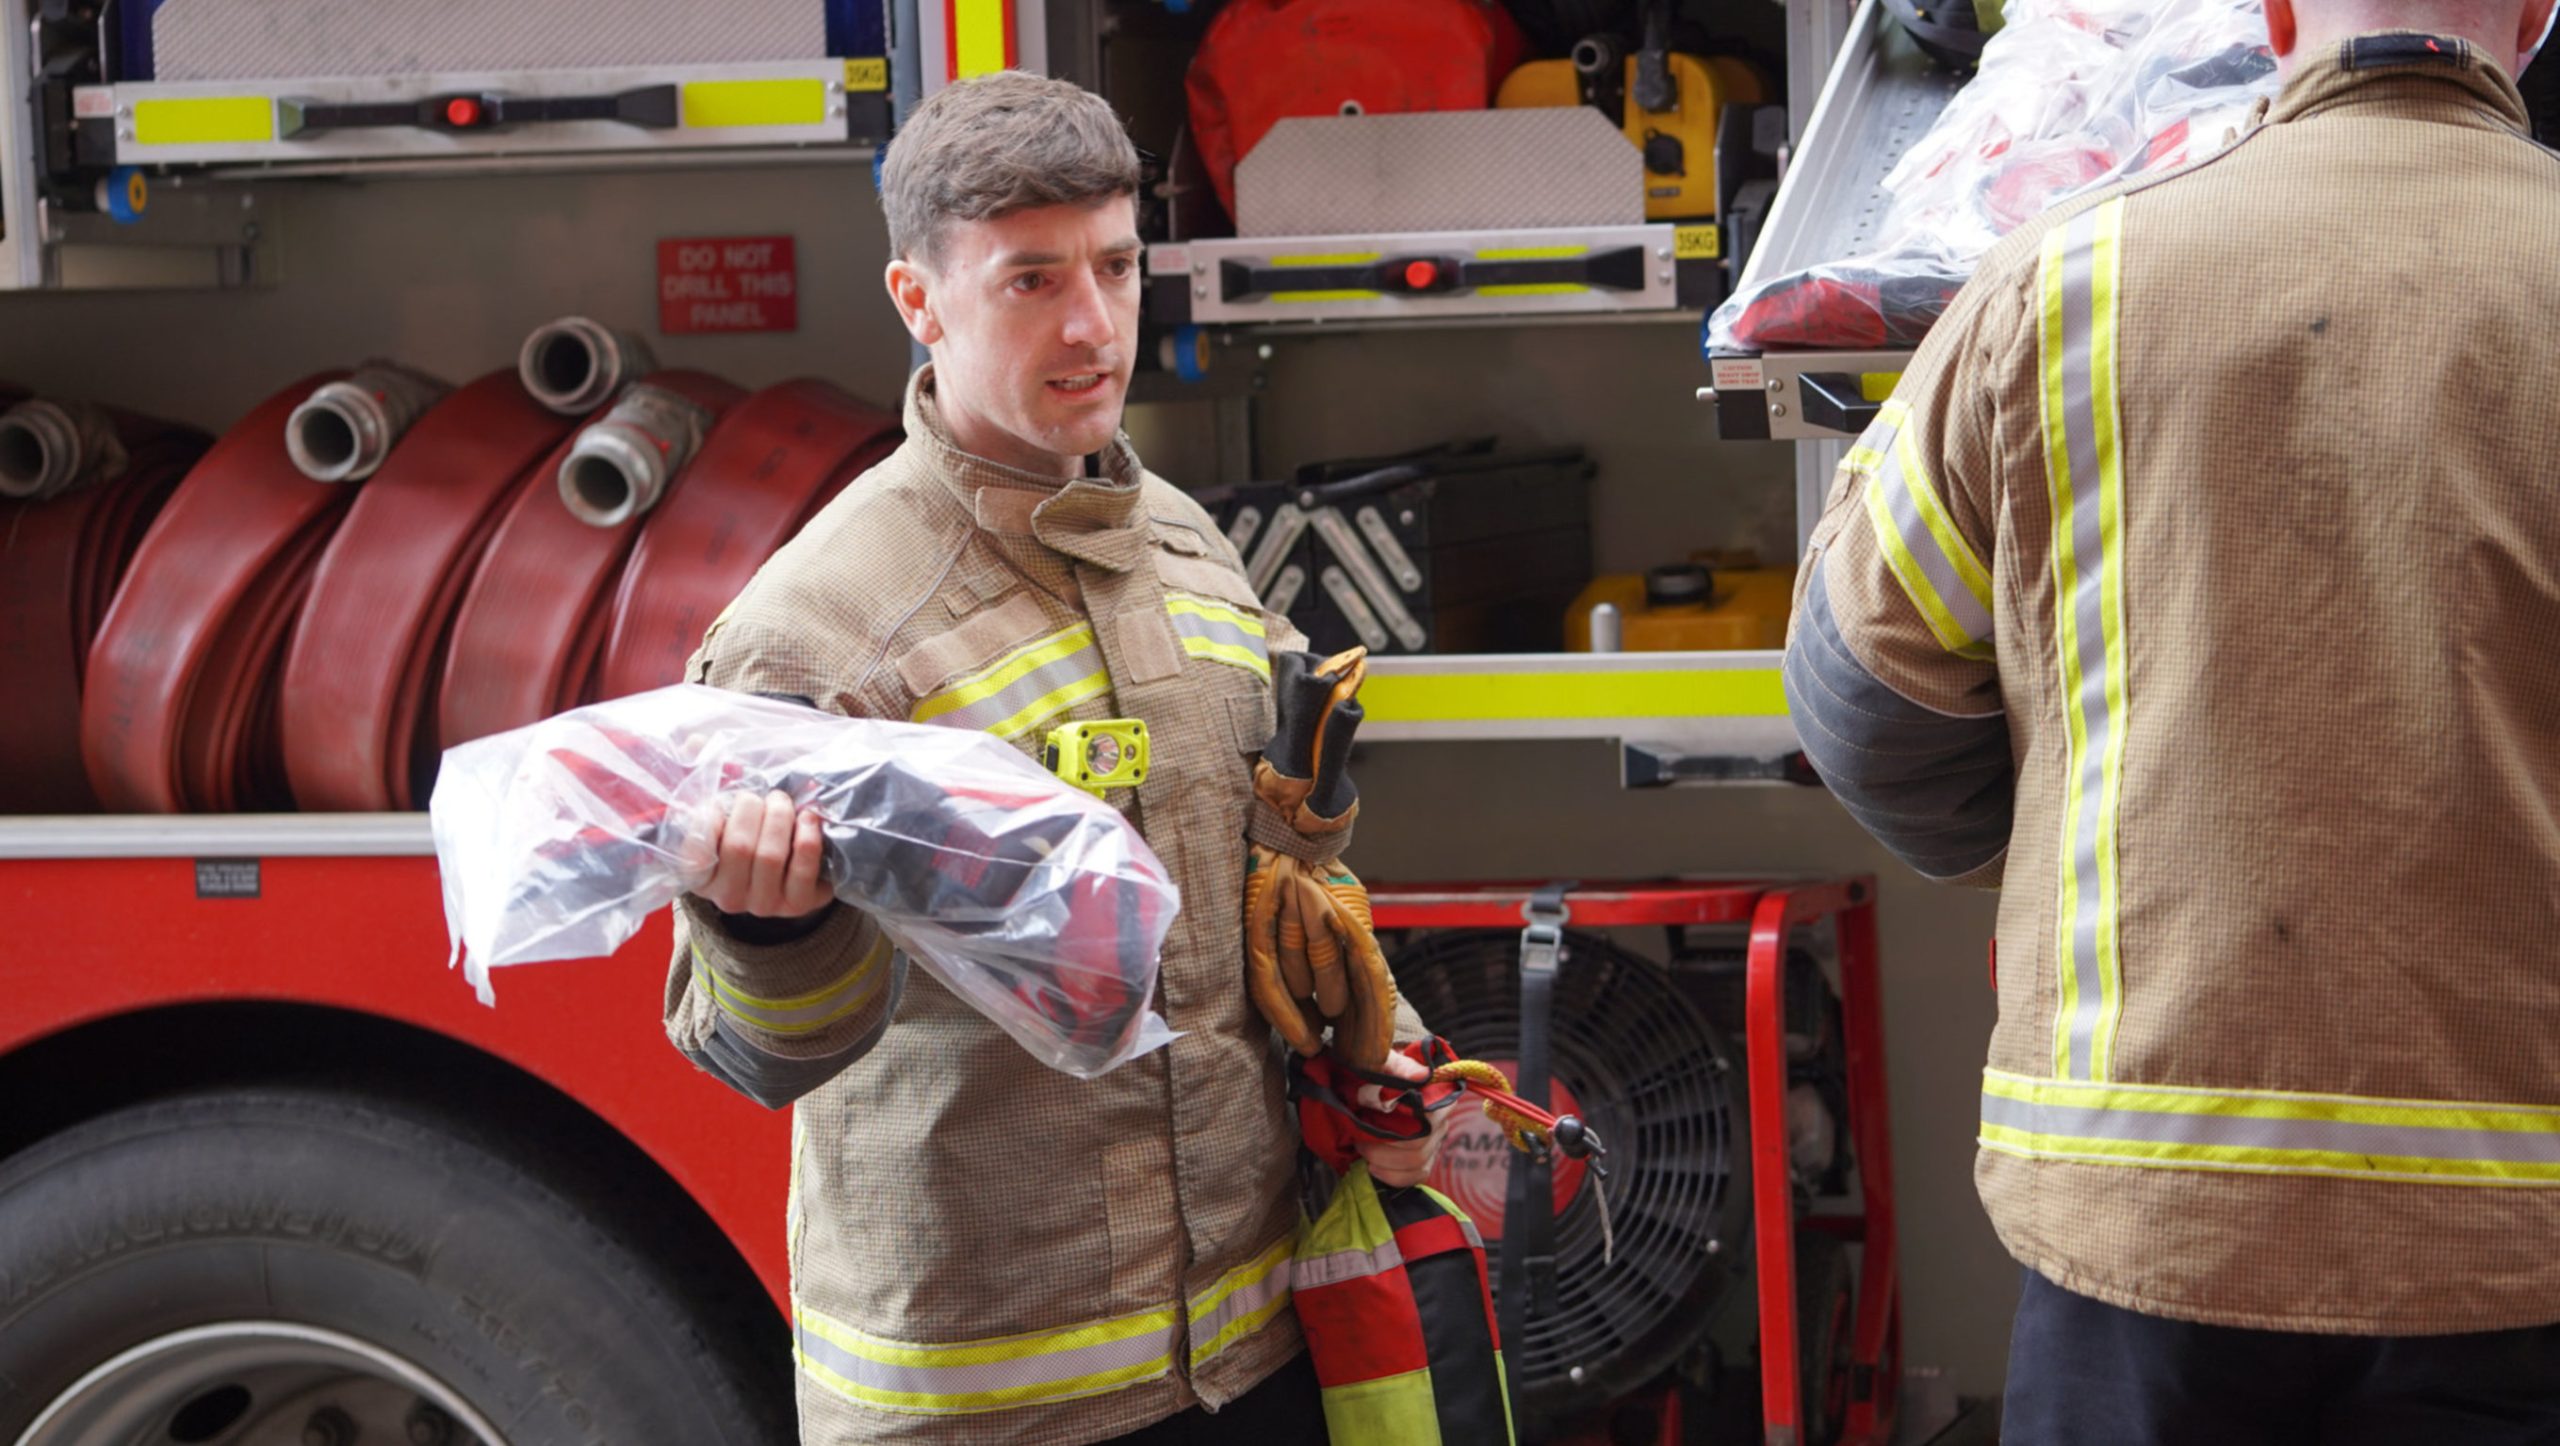 A firefighter holding equipment